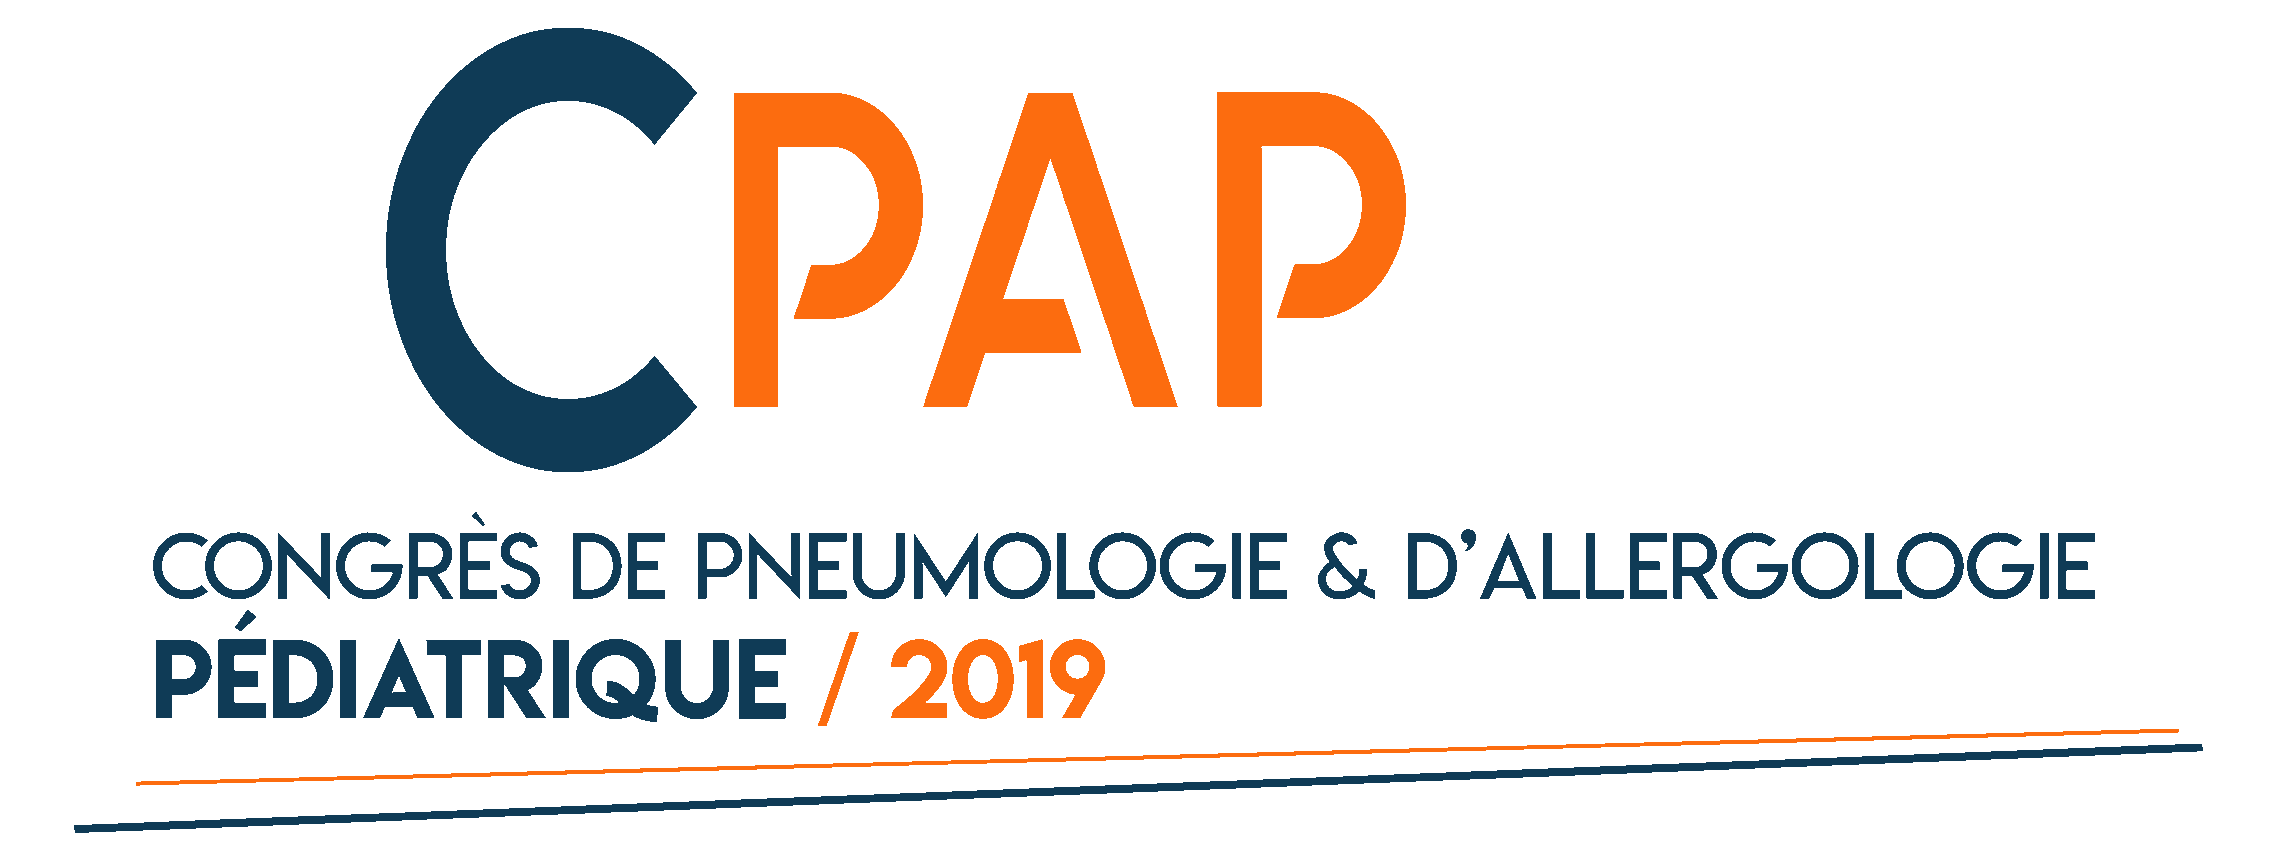 Congress of Pneumology and Pediatric Allergology (CPAP) 2019